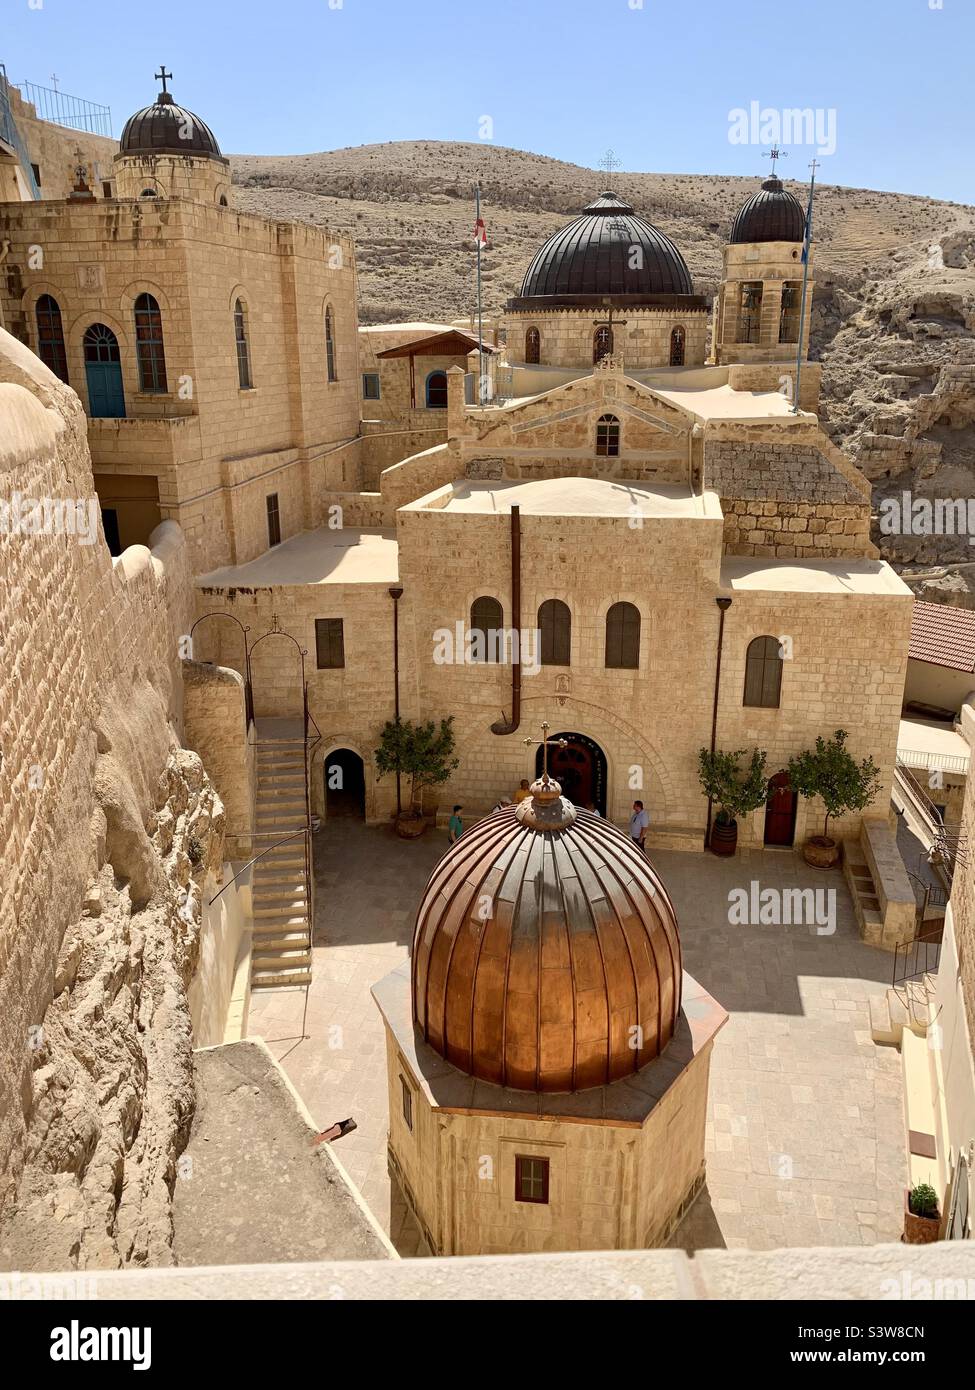 Mar Saba (orthodoxes) Kloster in der Nähe von Bethlehem, Westjordanland, Israel/Palästina Stockfoto